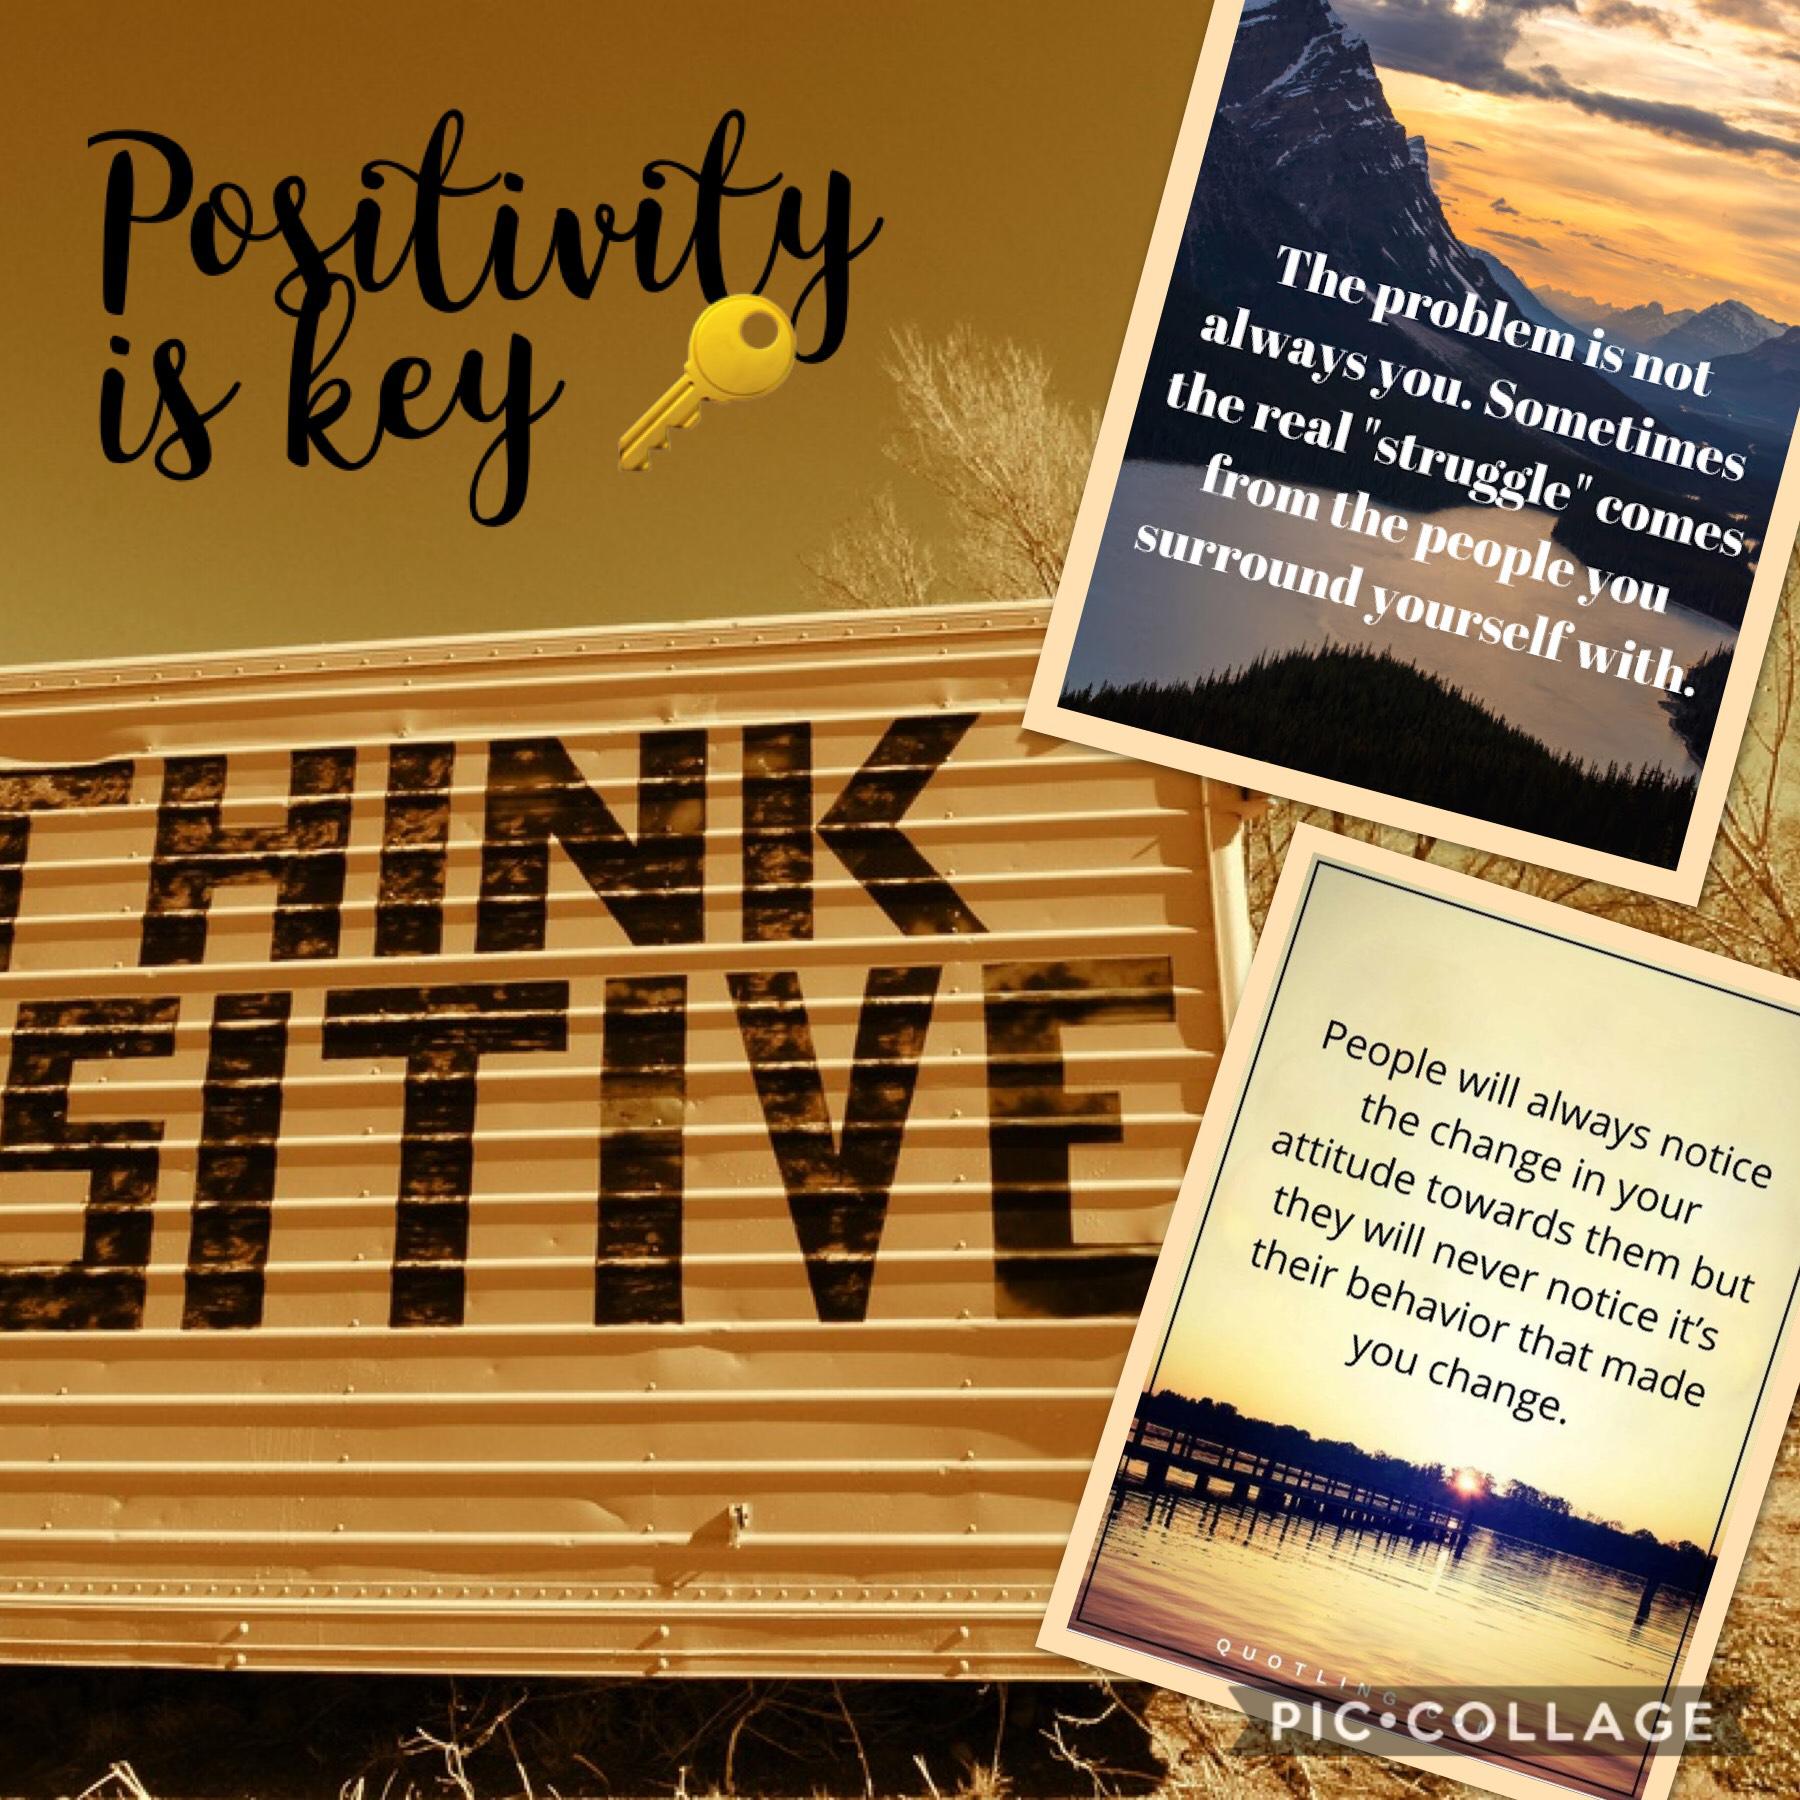 Let’s spread positivity!!!